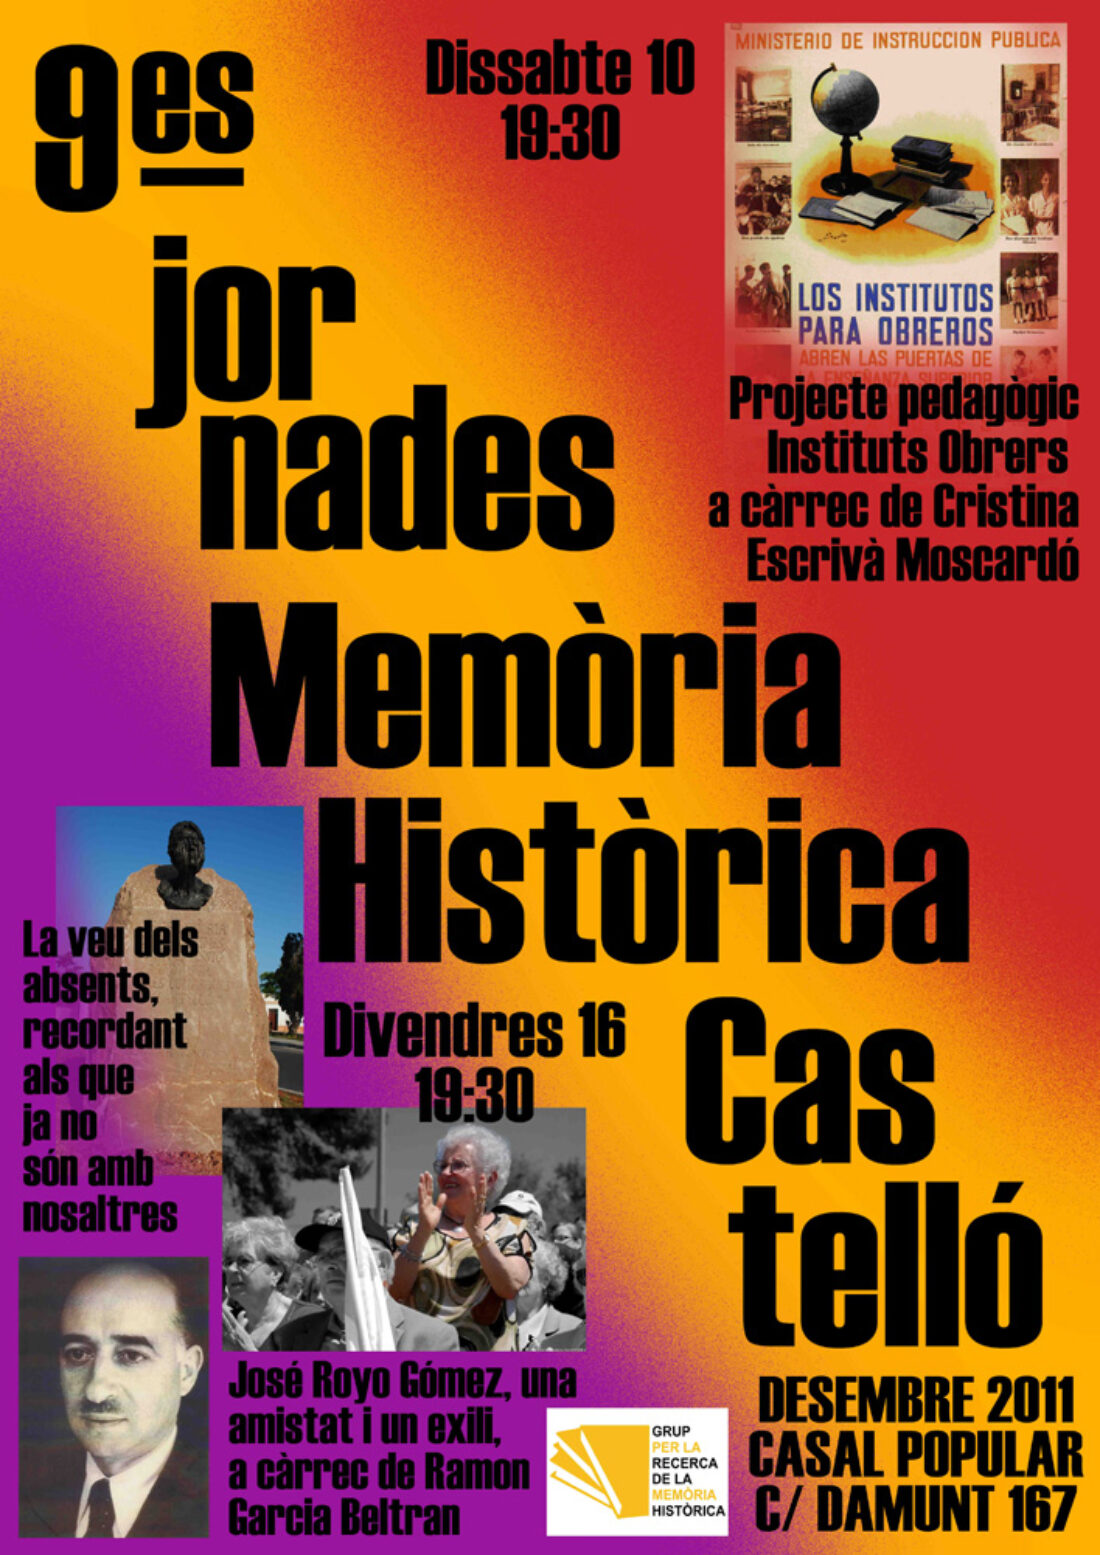 Castellón: 9as Jornadas Memoria Histórica